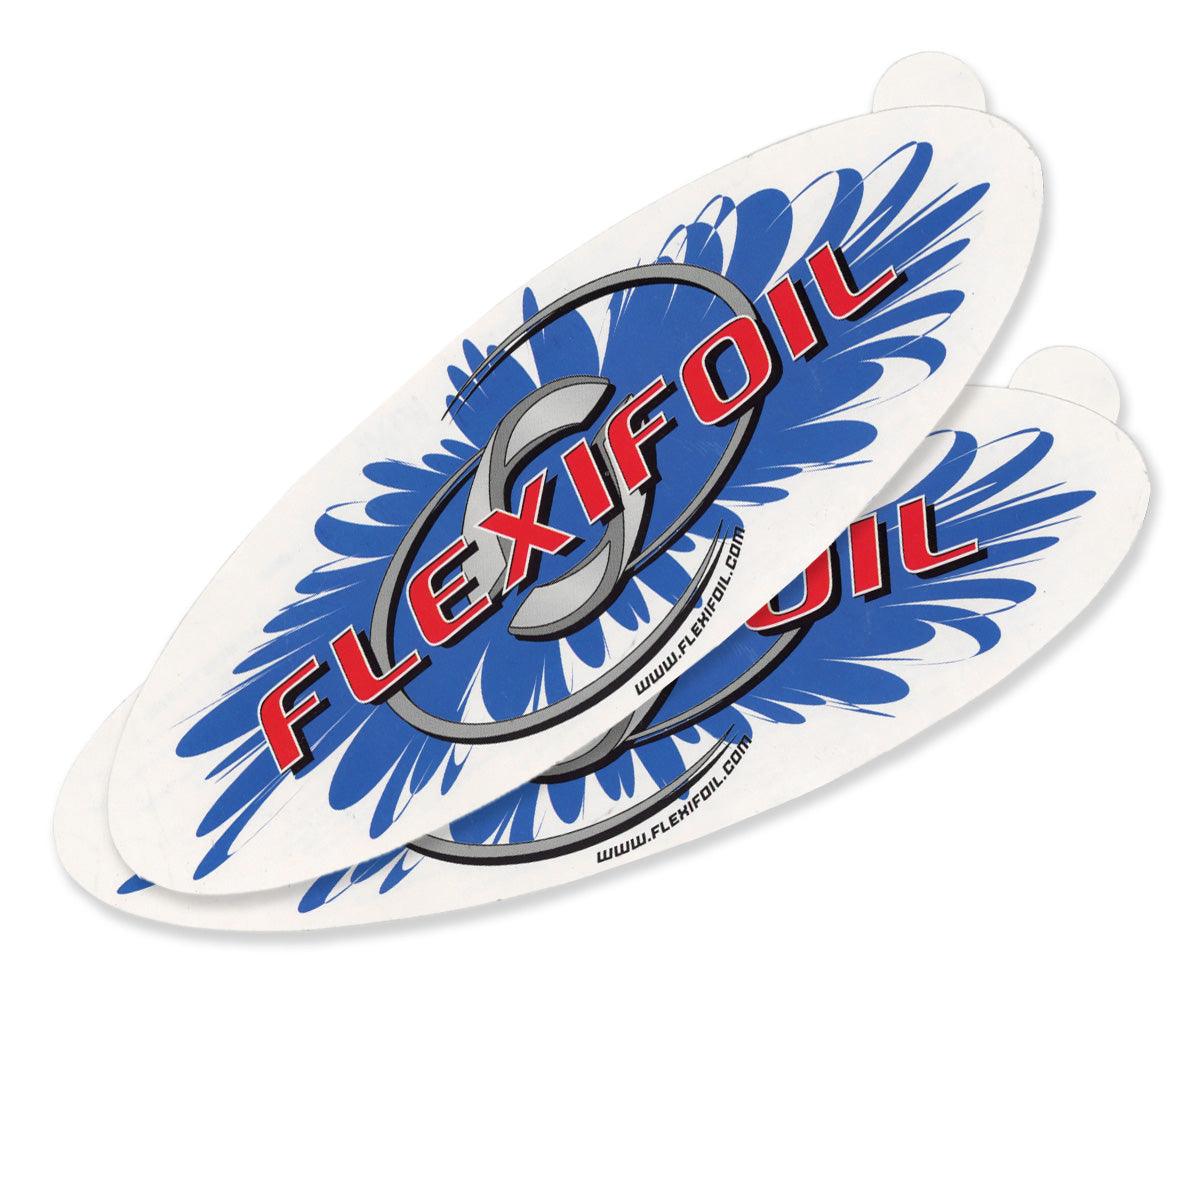 Flexifoil Oval Logo Sticker - Kitesurf